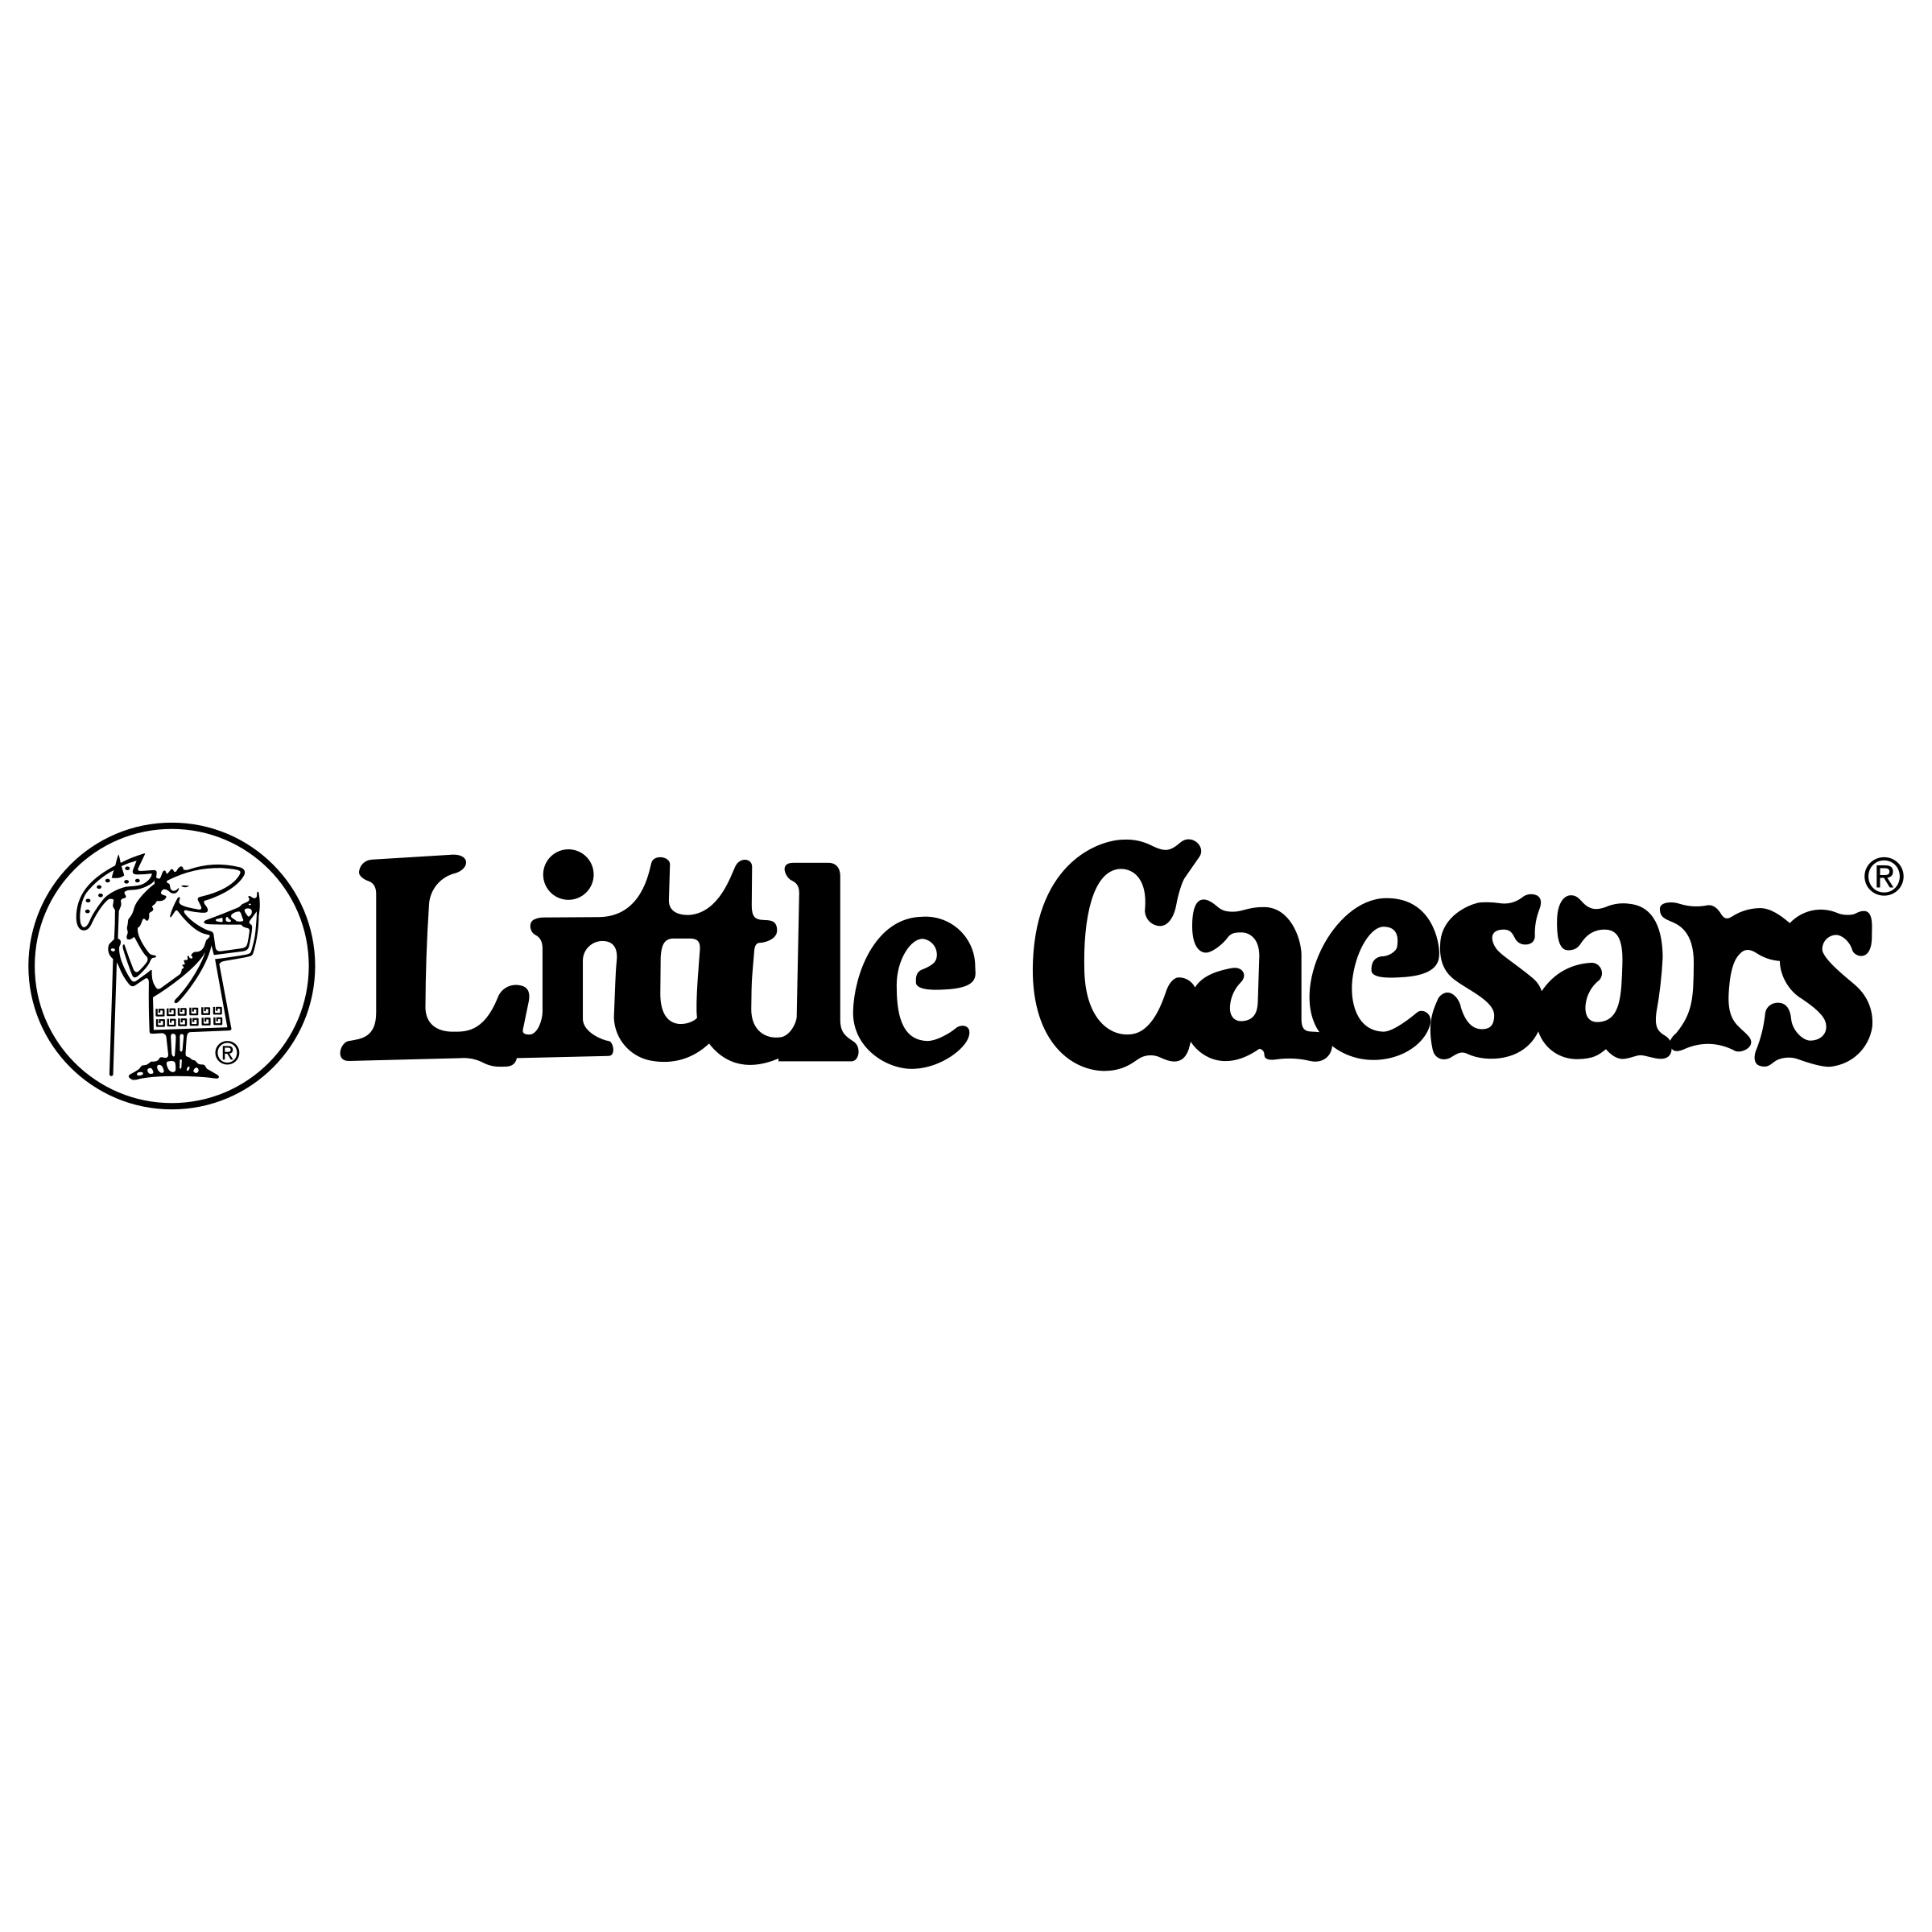 Little Ceasars Logo - Little Caesars Pizza Logo PNG Transparent & SVG Vector - Freebie Supply